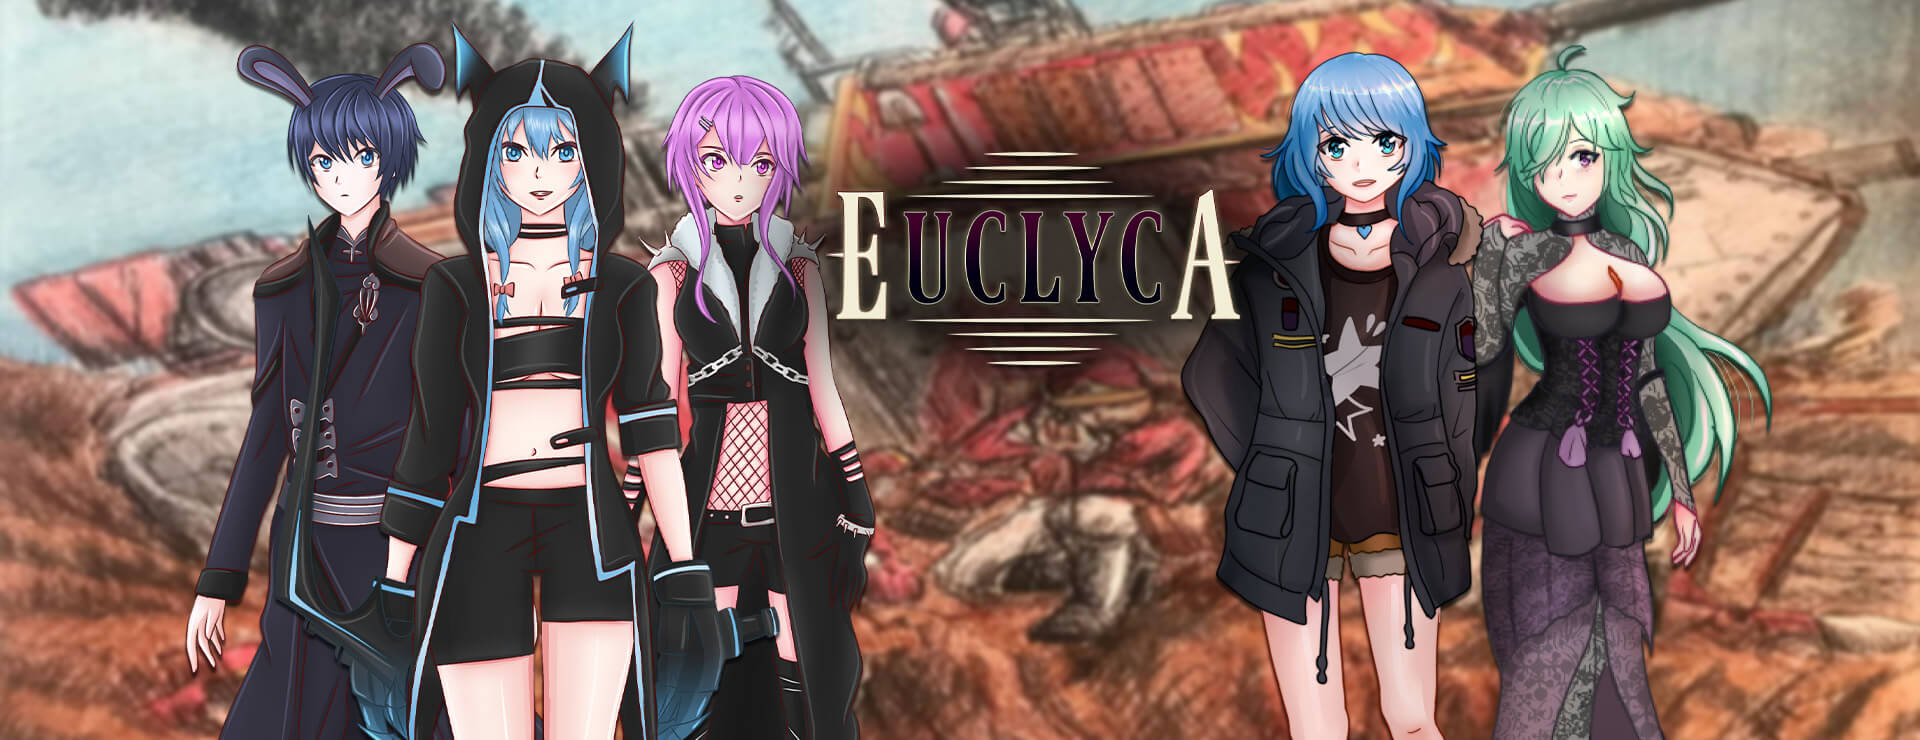 Euclyca - RPG Spiel